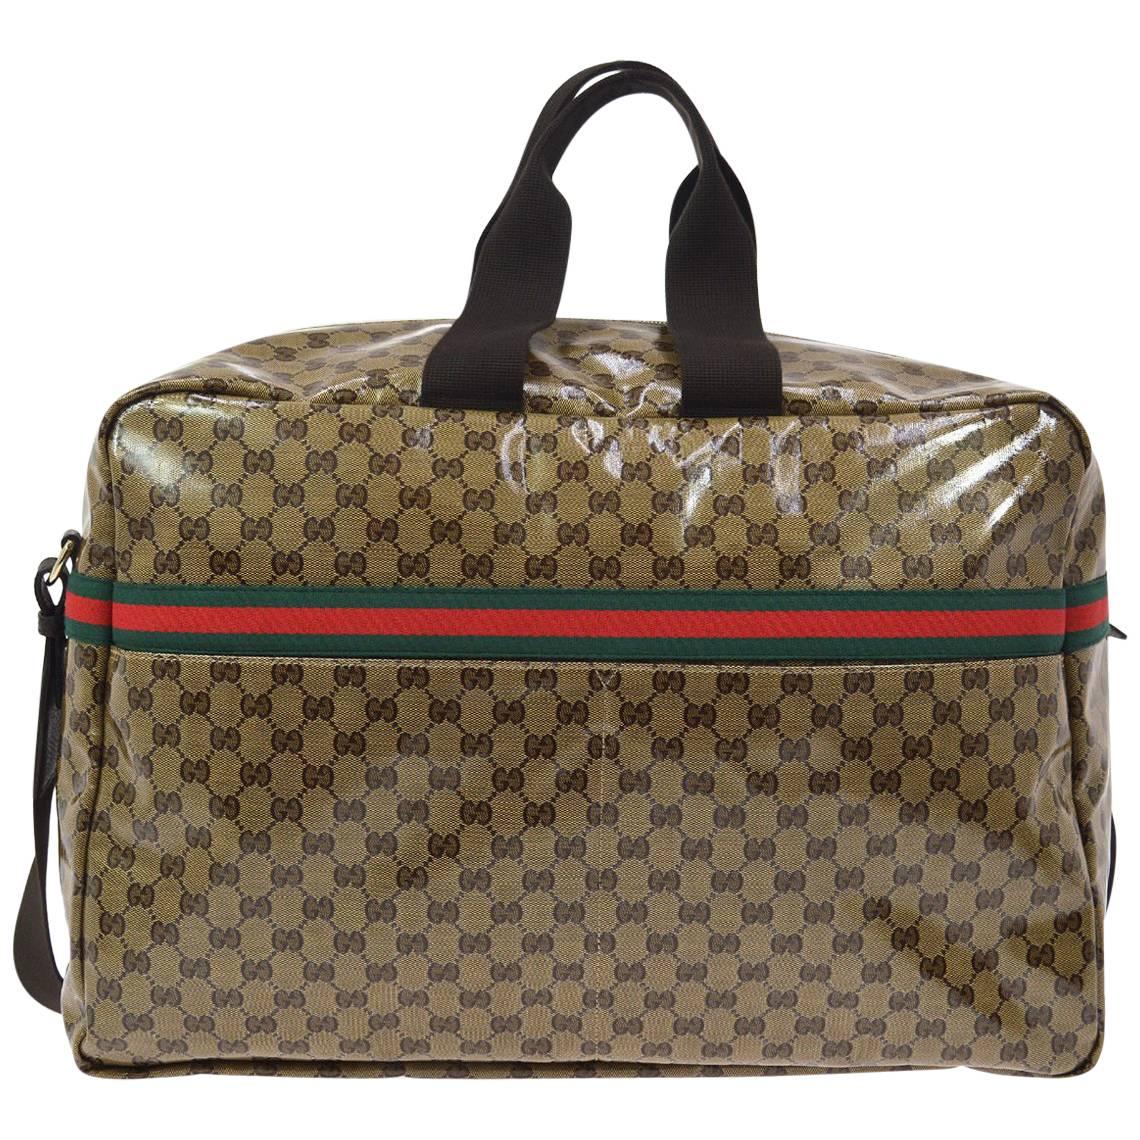 Gucci Monogram Men's Women's Travel Duffle Carryall Weekender Shoulder Tote Bag